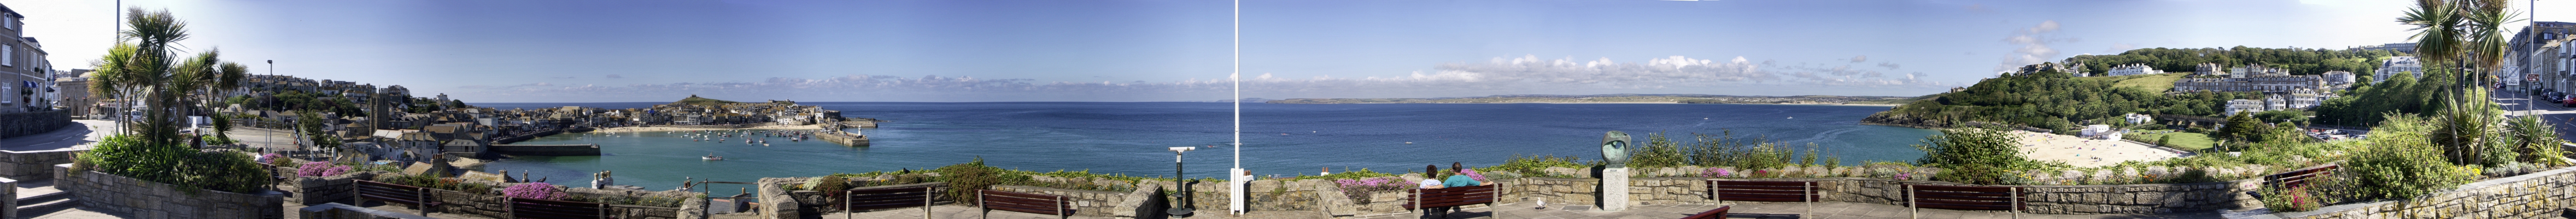 St Ives Panorama.jpg